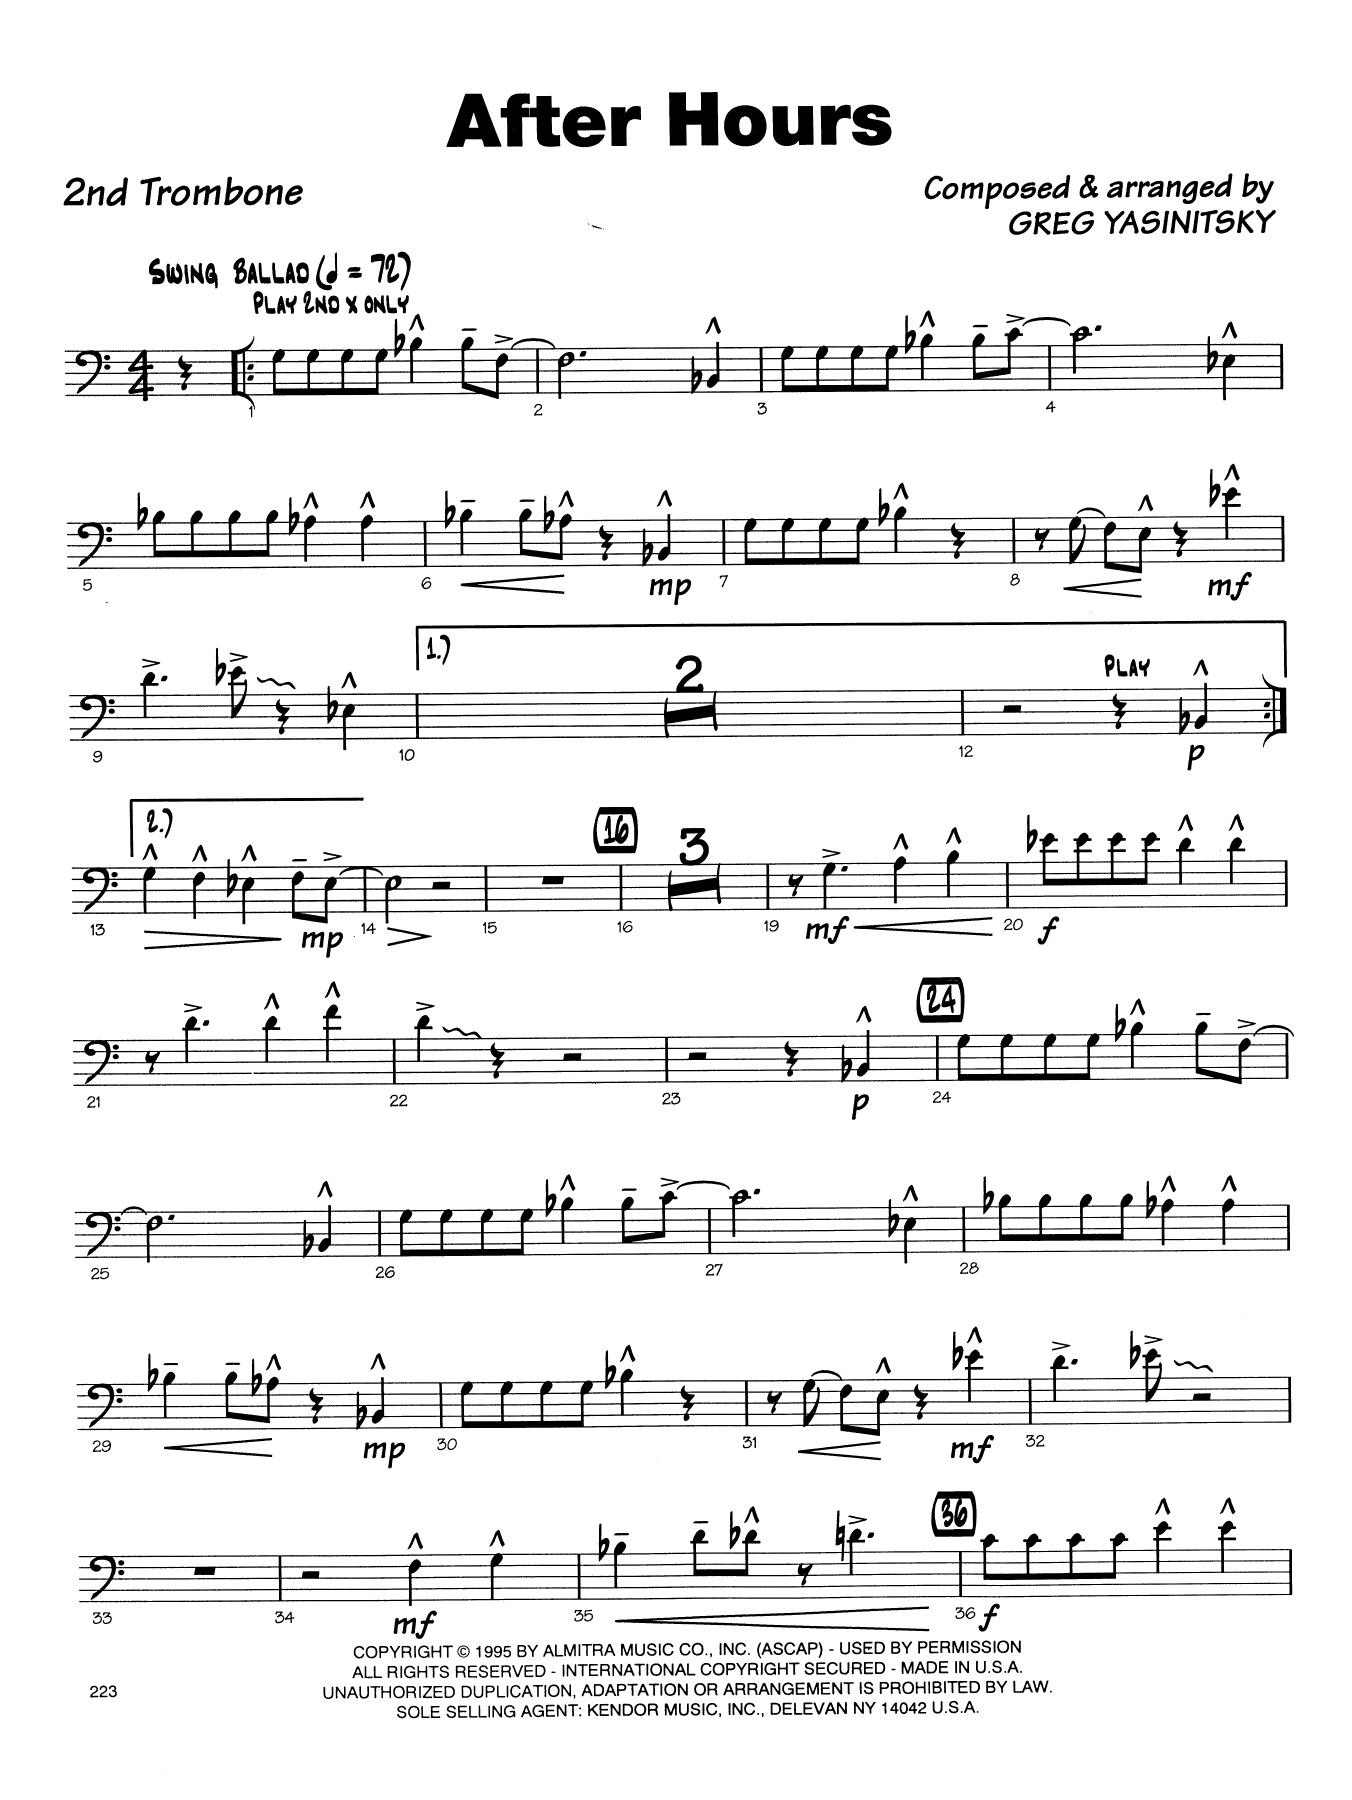 Download Gregory Yasinitsky After Hours - 2nd Trombone Sheet Music